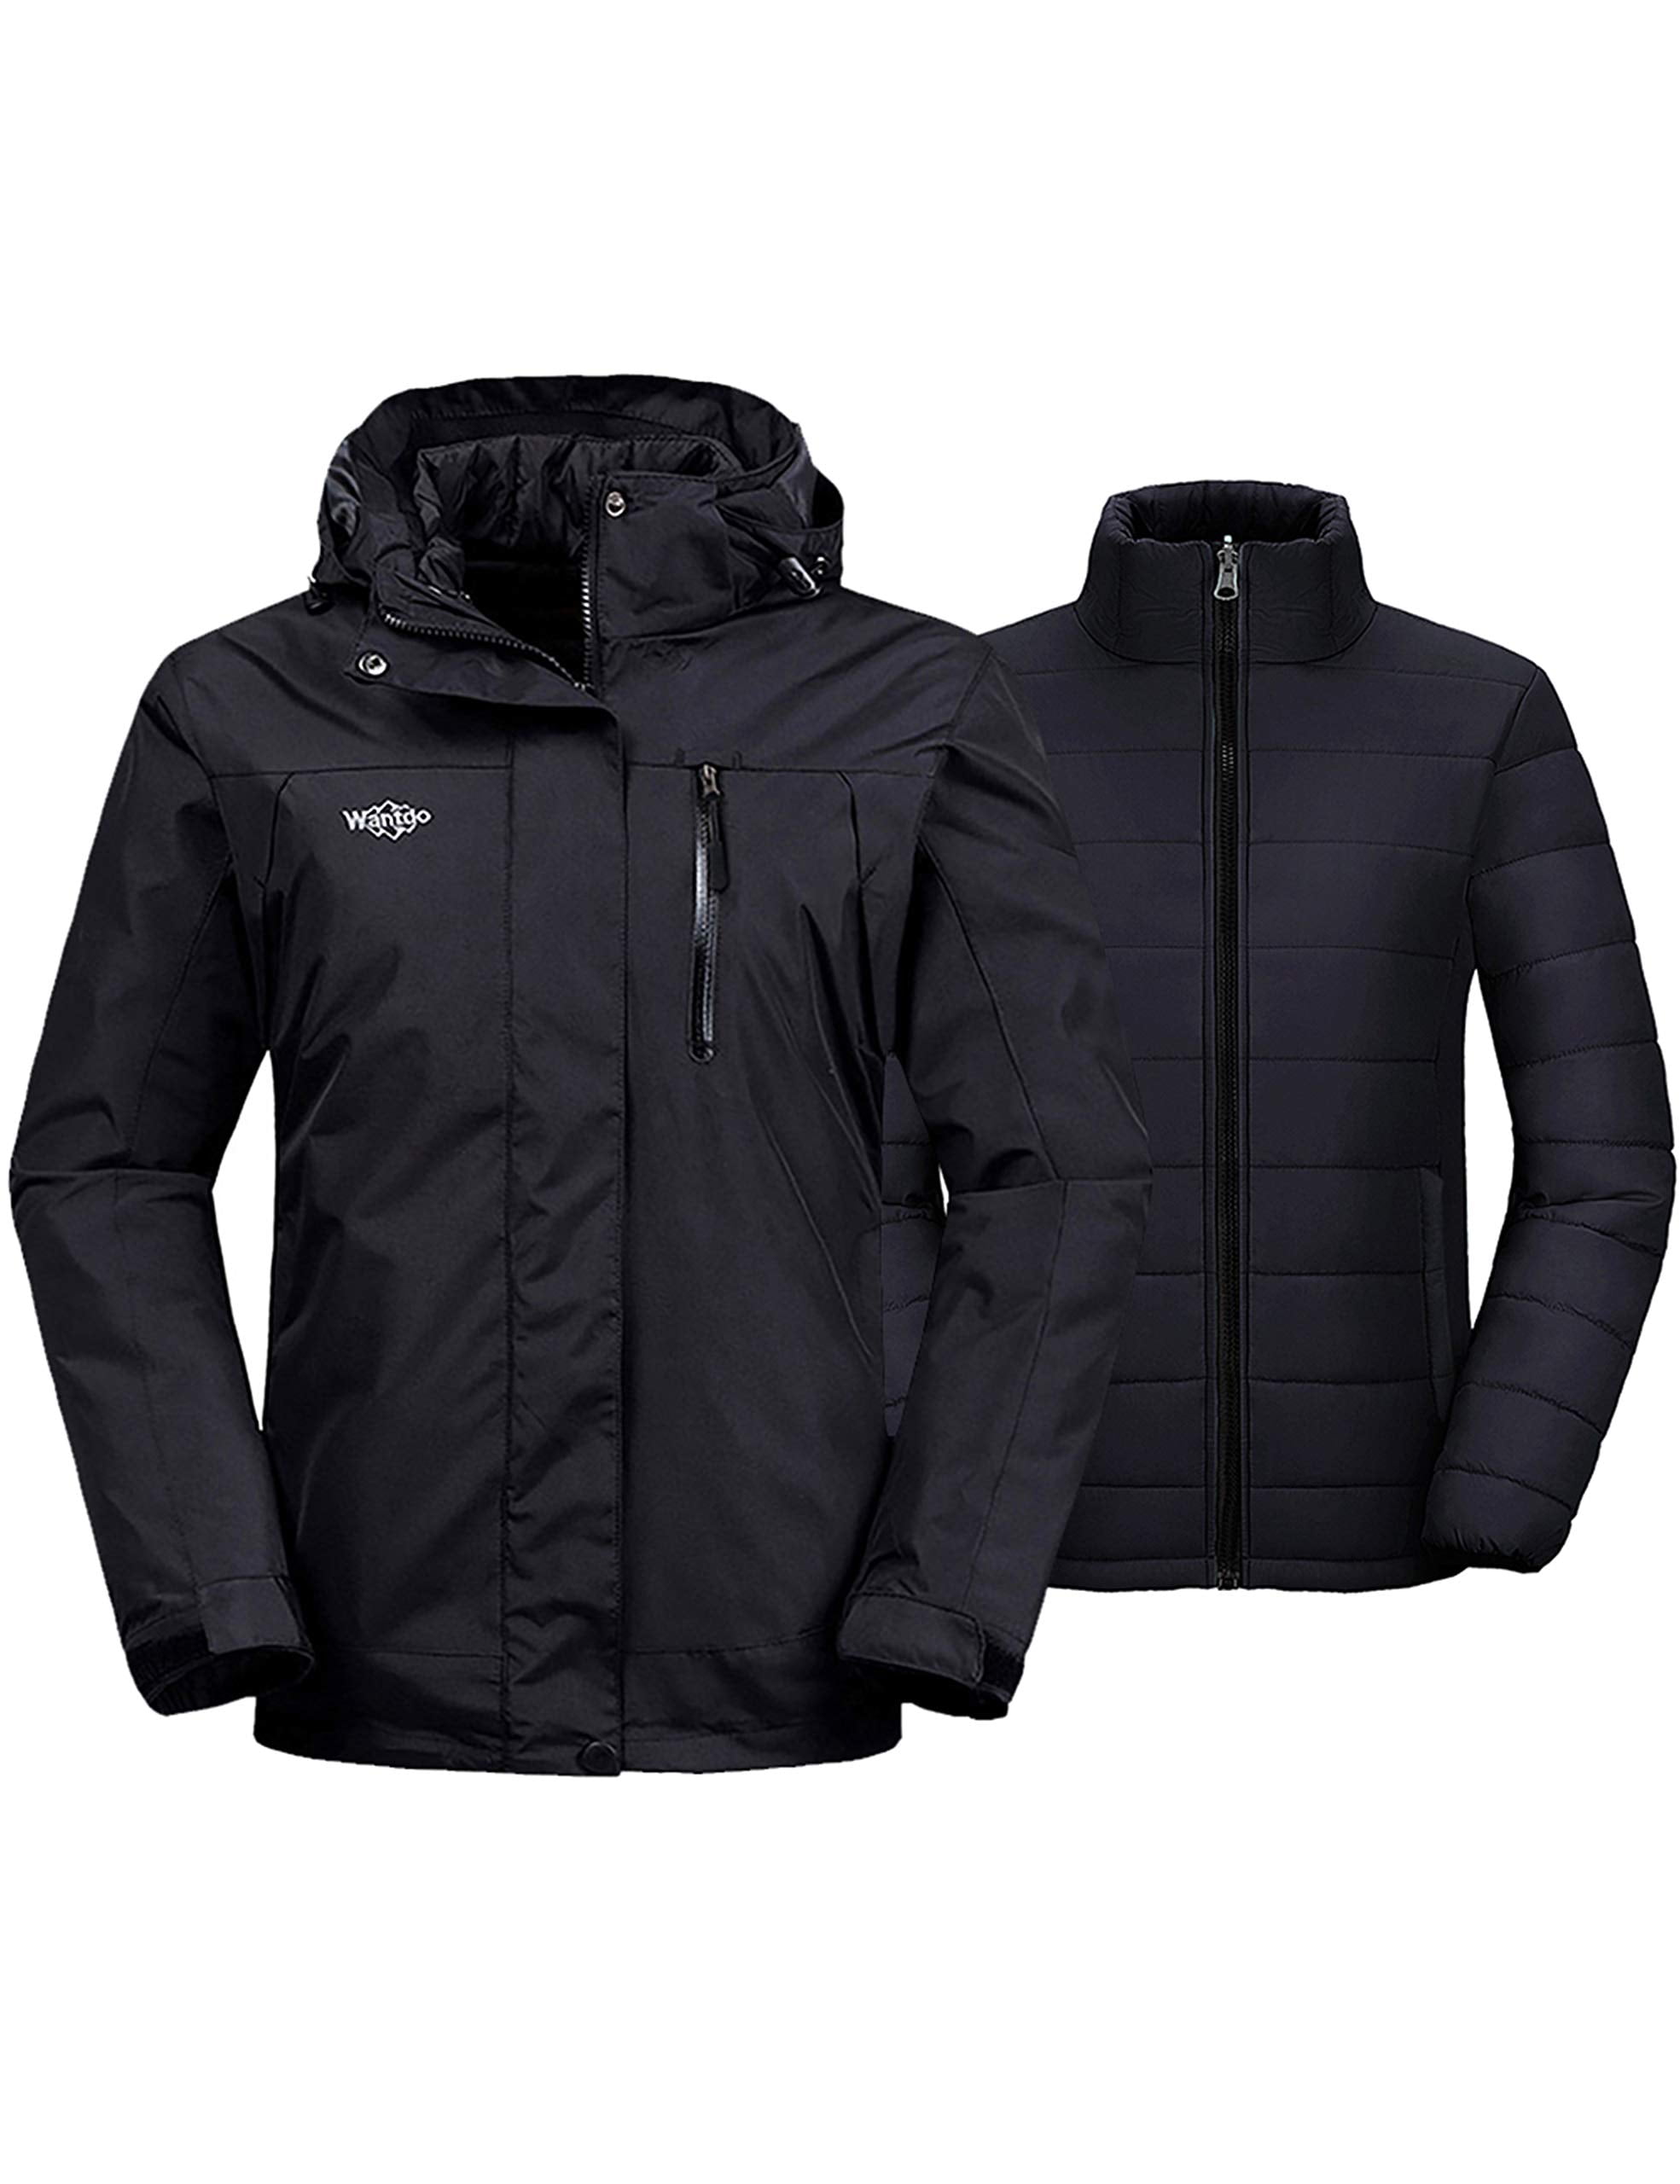 Wantdo Men's Waterproof 3 in 1 Ski Jacket Warm Winter Coat Windproof Snowboarding Jackets with Detachable Puffer Coat 